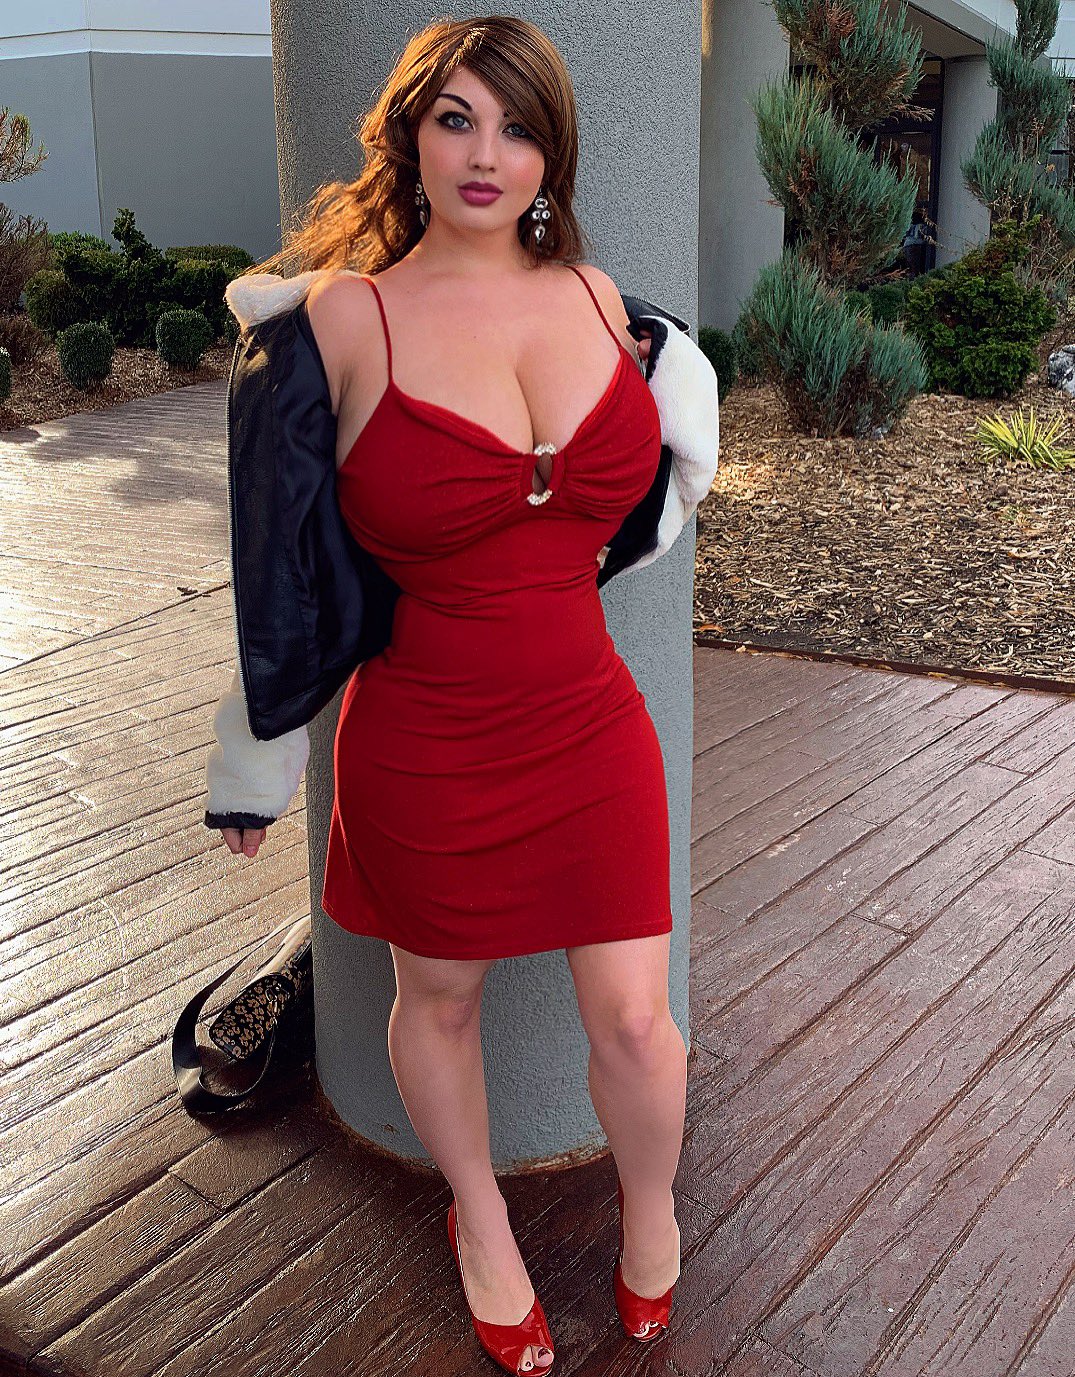 erin eevee on X: Do you like my red dress?💋❤️ t.coLCKQFRum1T  X